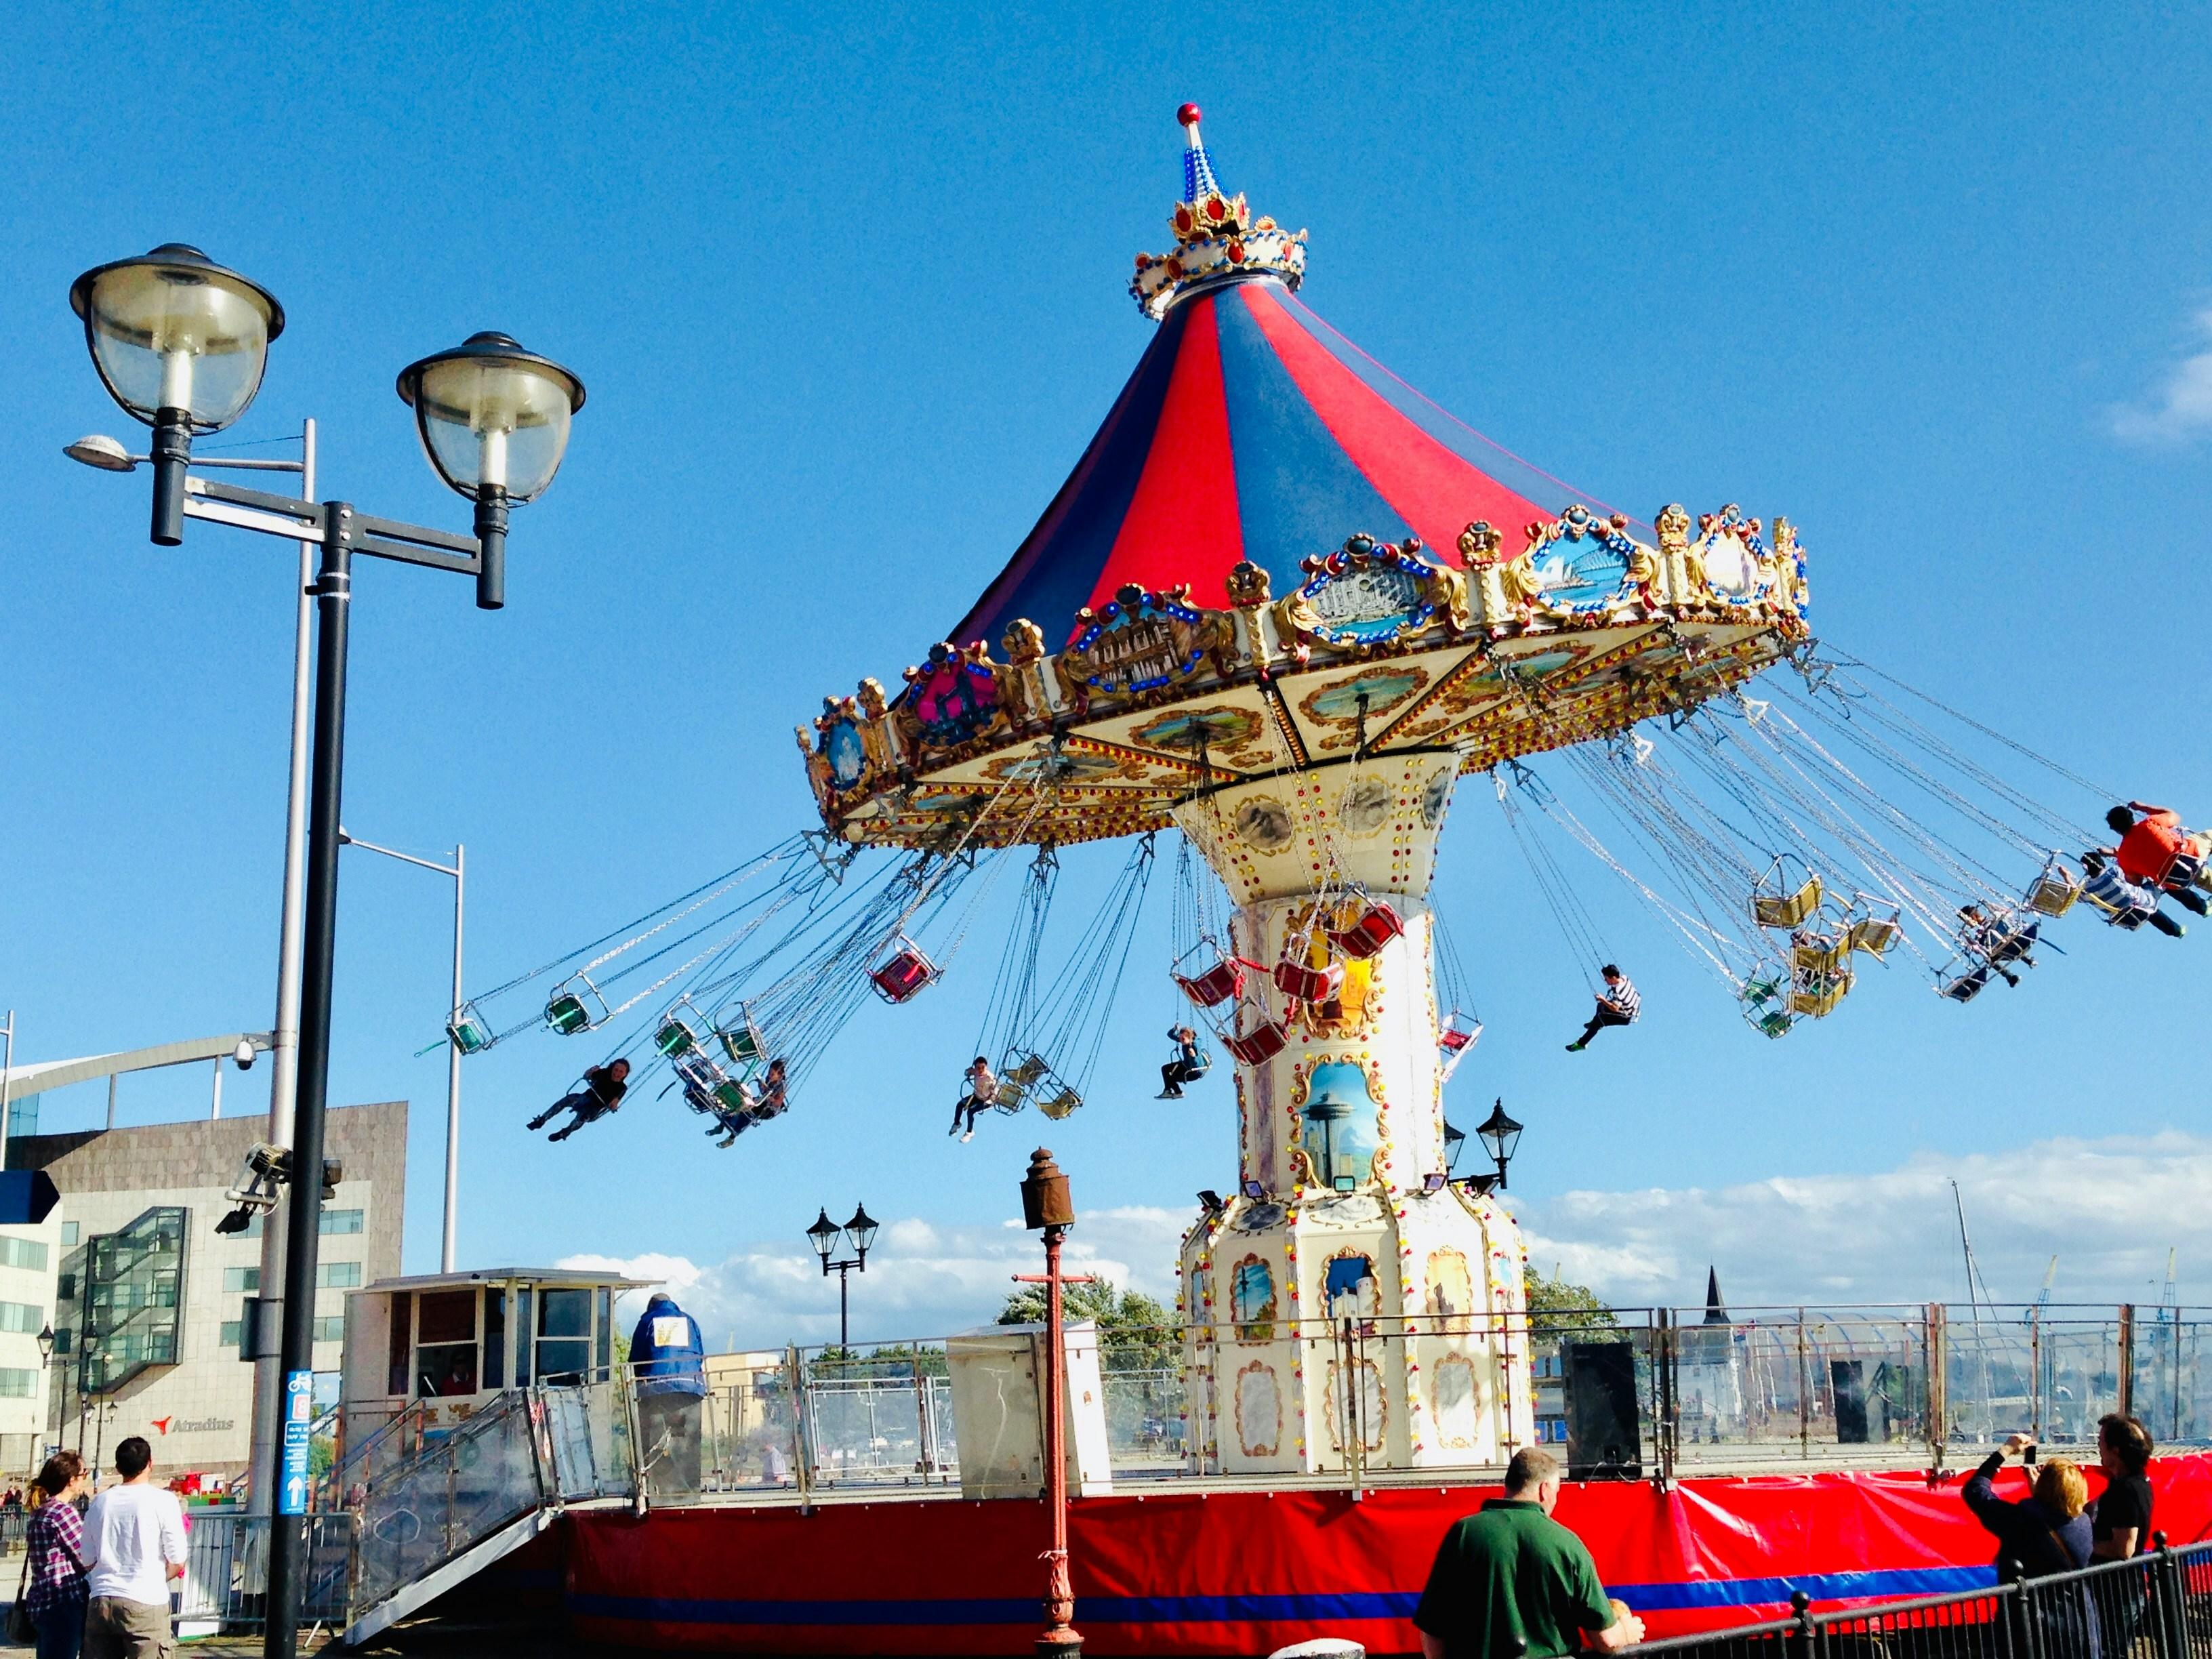 amusement park ride at local fair